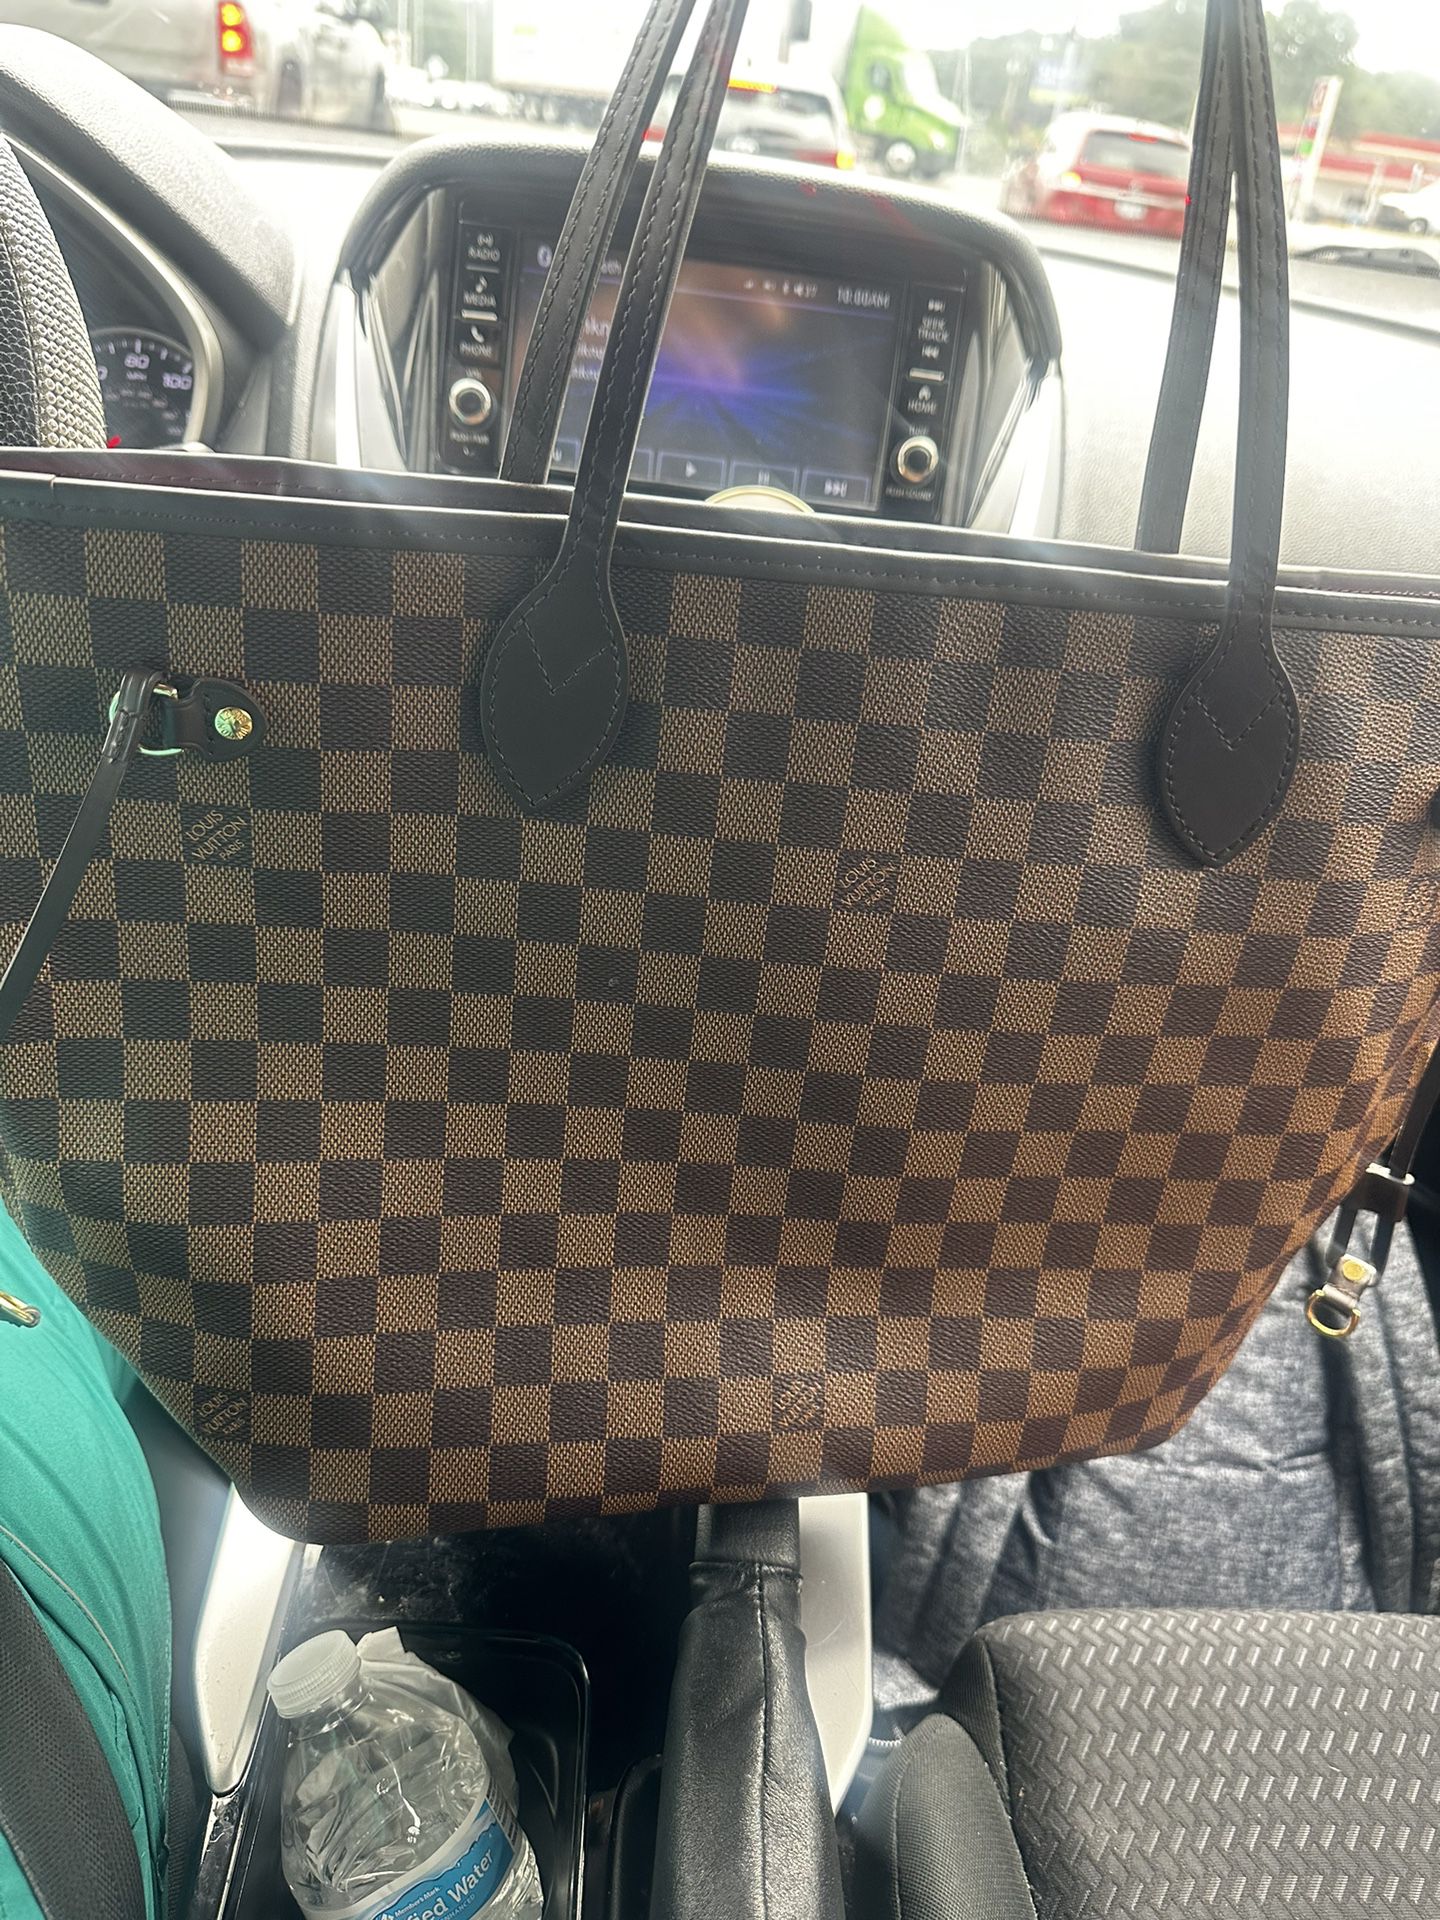 Louis Vuitton Rivoli Mm Bag for Sale in Clermont, FL - OfferUp